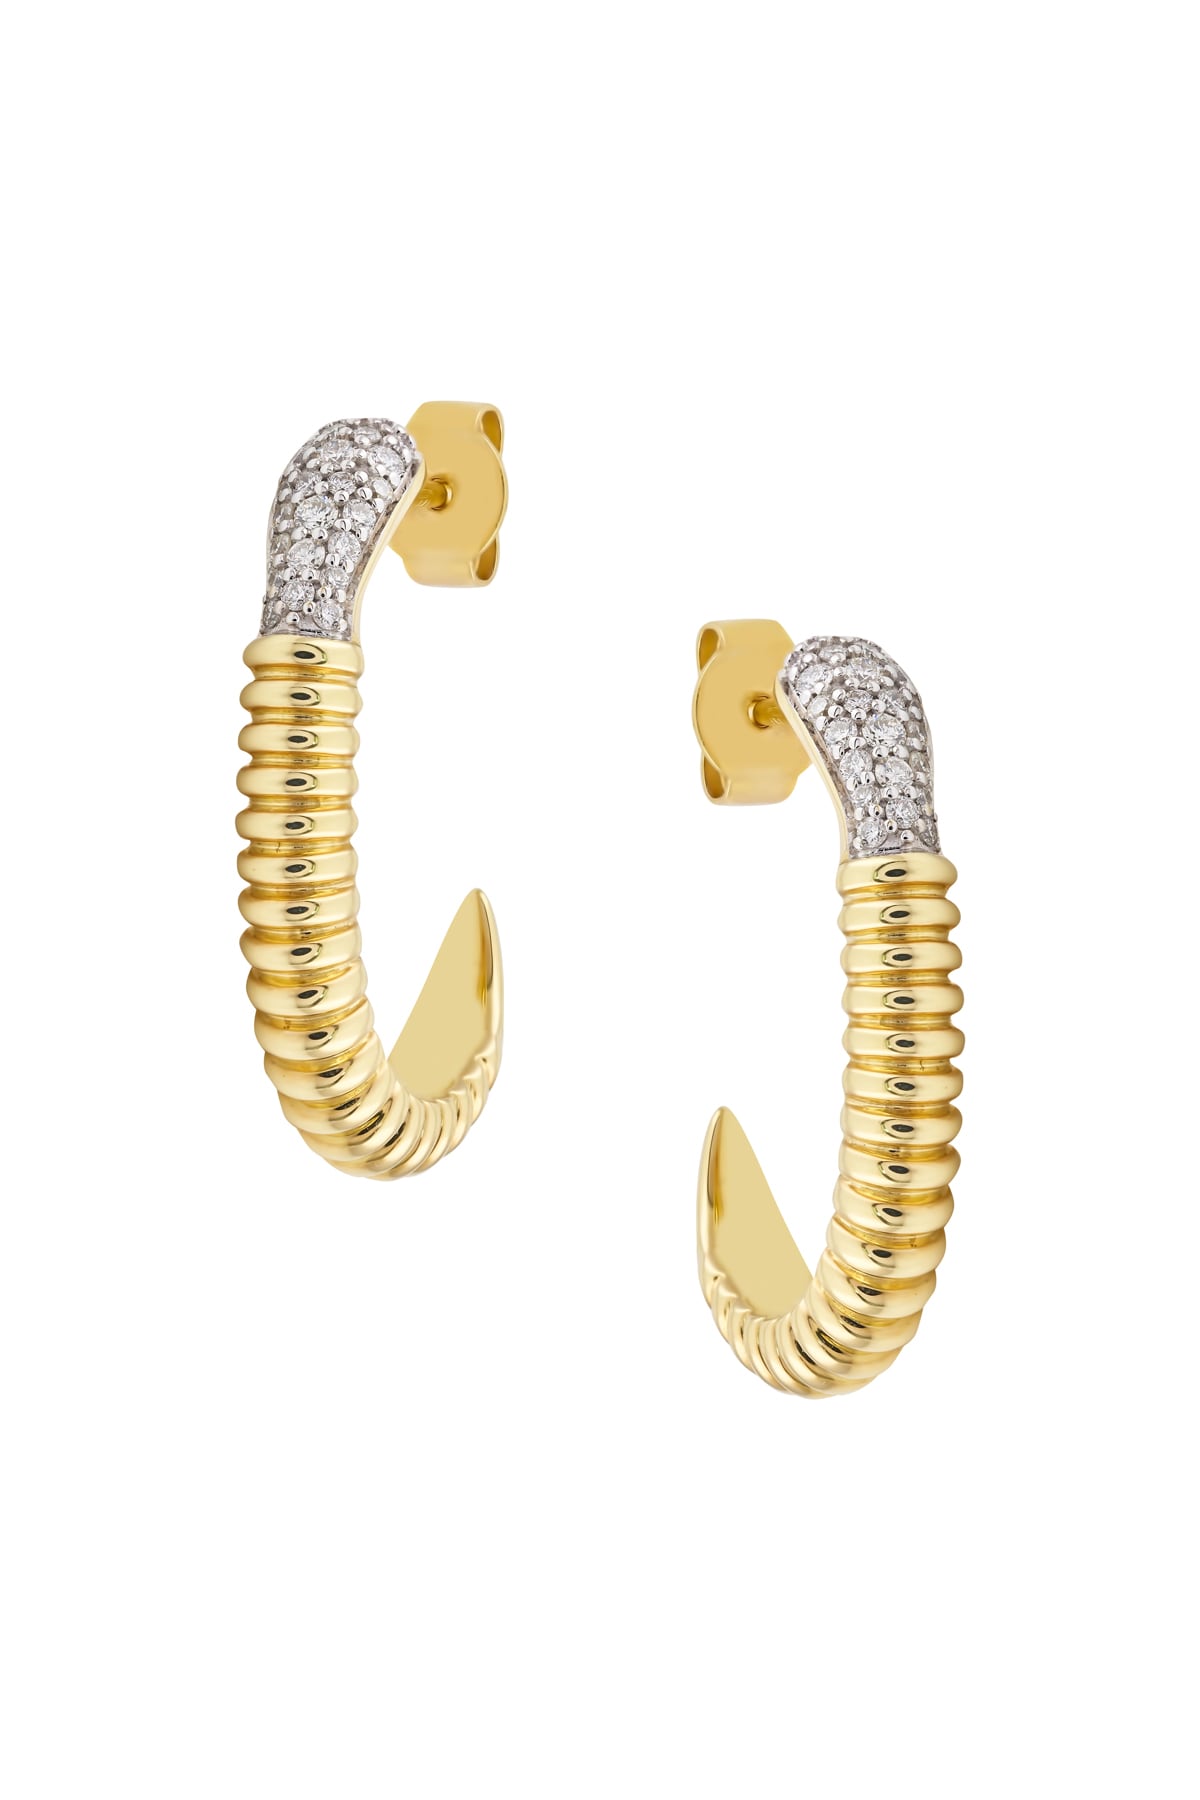 Diamond Half Hoop Earrings in Yellow Gold from LeGassick Jewellery.